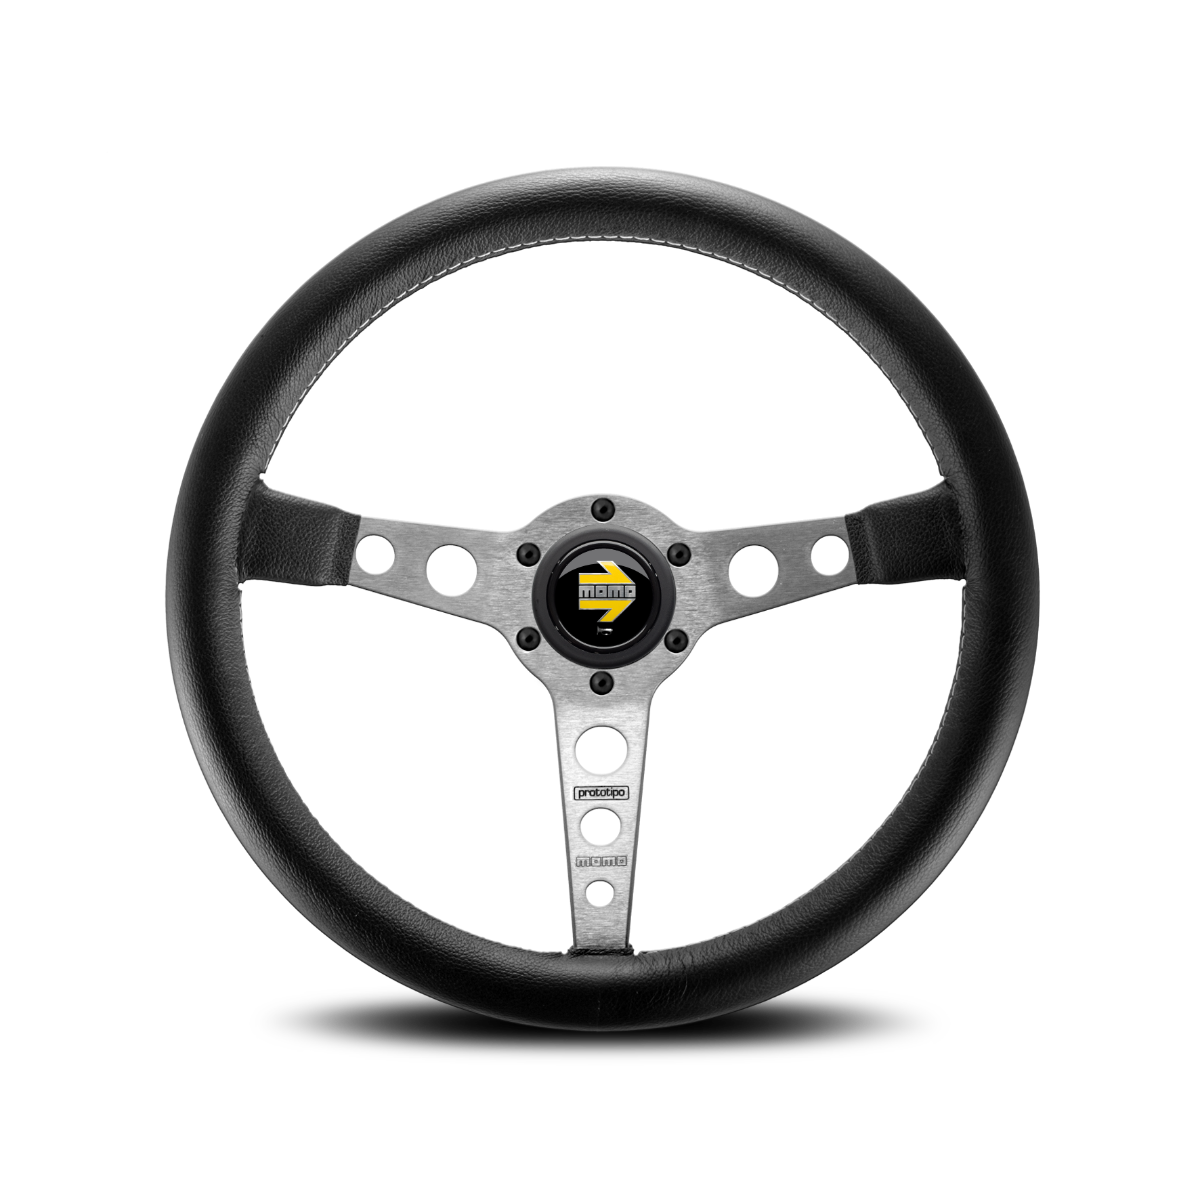 Momo Prototipo Steering Wheel - Silver/Black 350mm